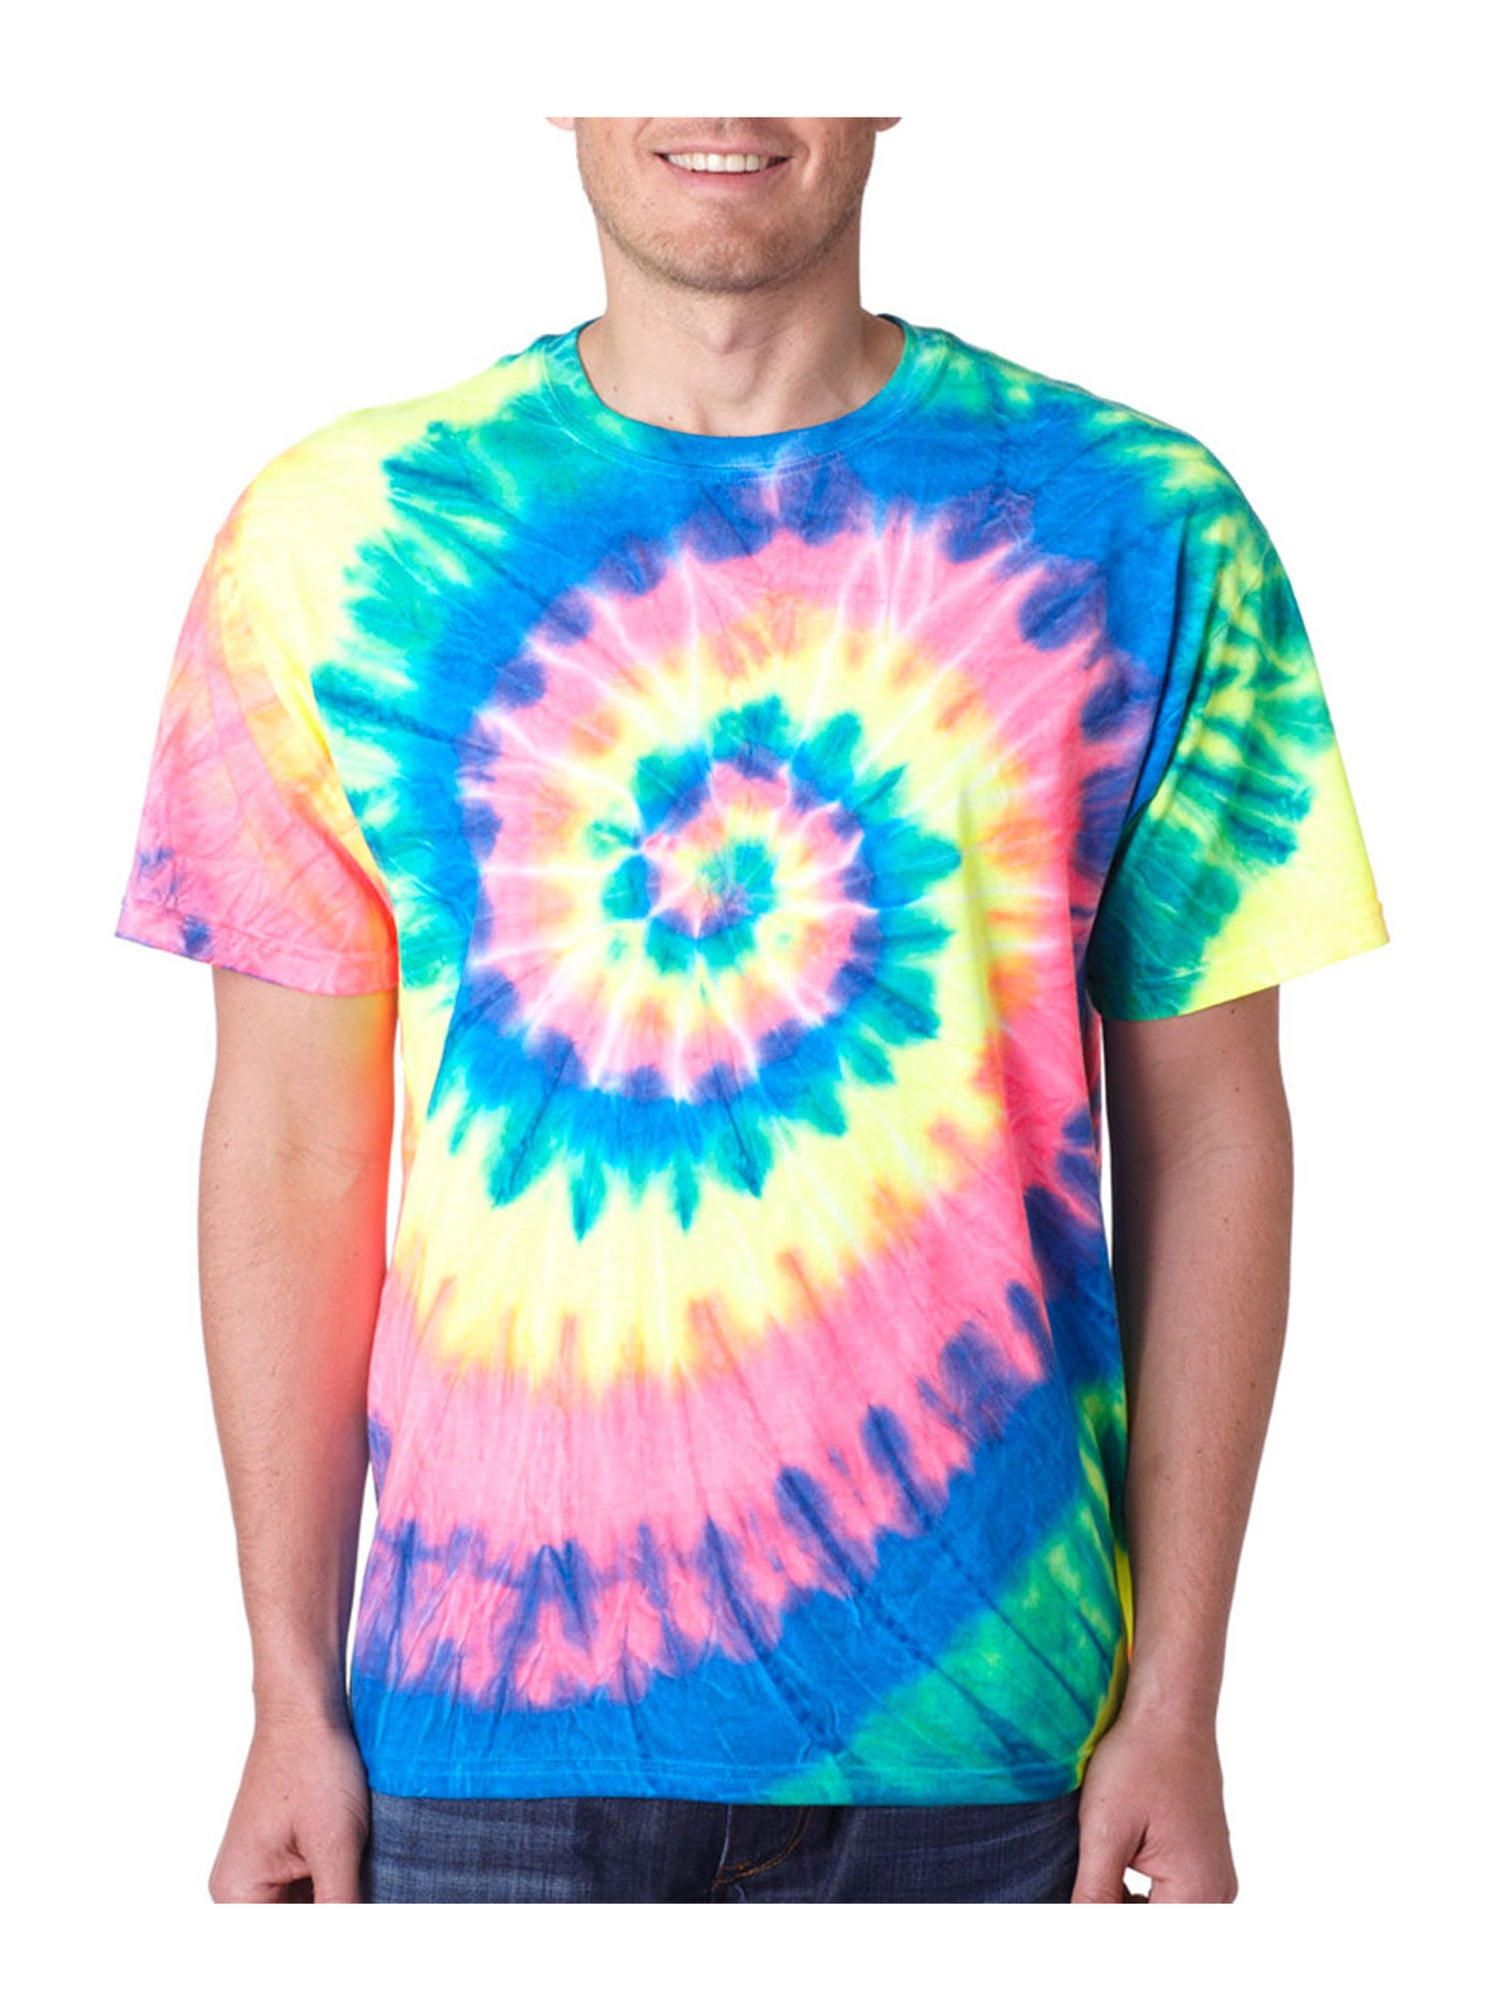 Gildan Men's Colorful Tie-Dye Rainbow Swirl T-Shirt, Style 200MS - Wal...